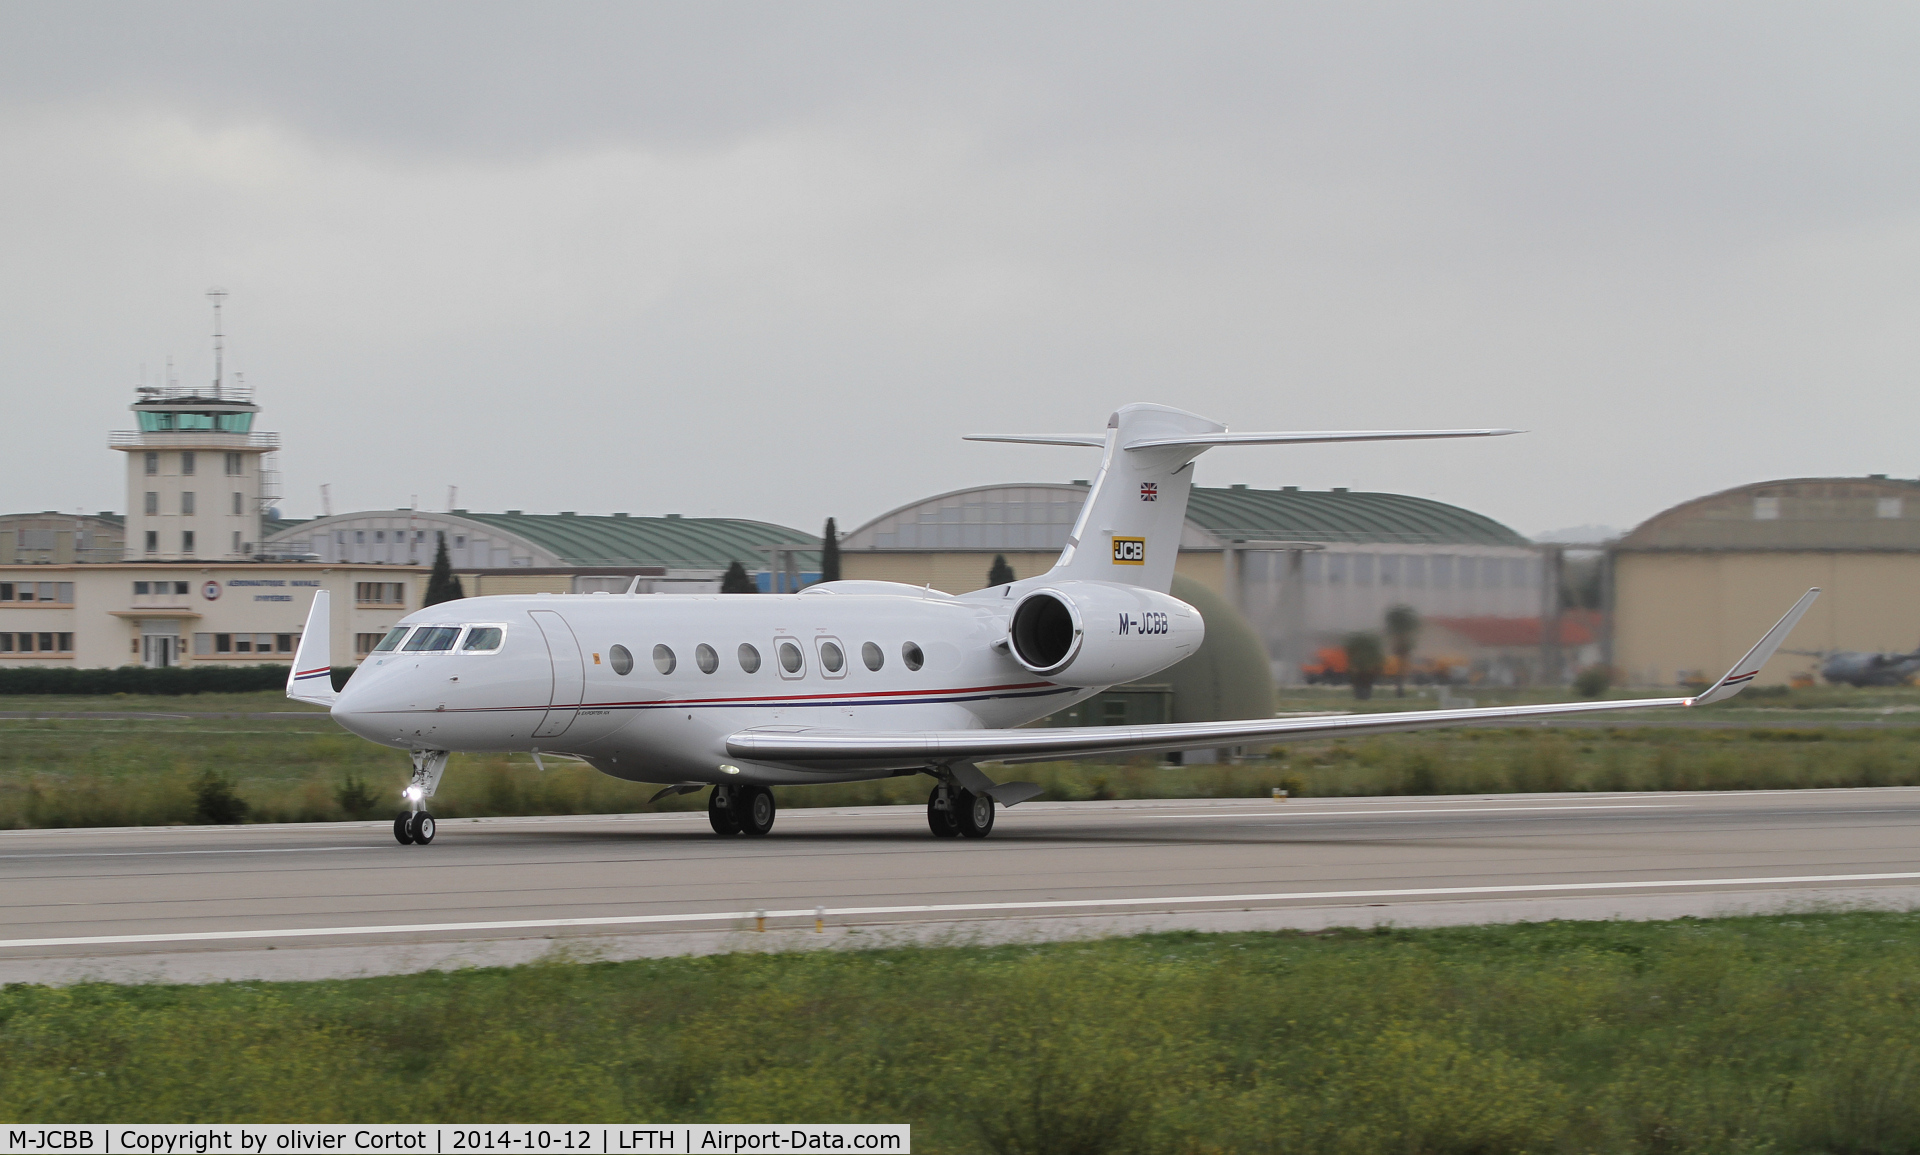 M-JCBB, 2013 Gulfstream Aerospace G650 (G-VI) C/N 6049, Taking off from Hyères airport